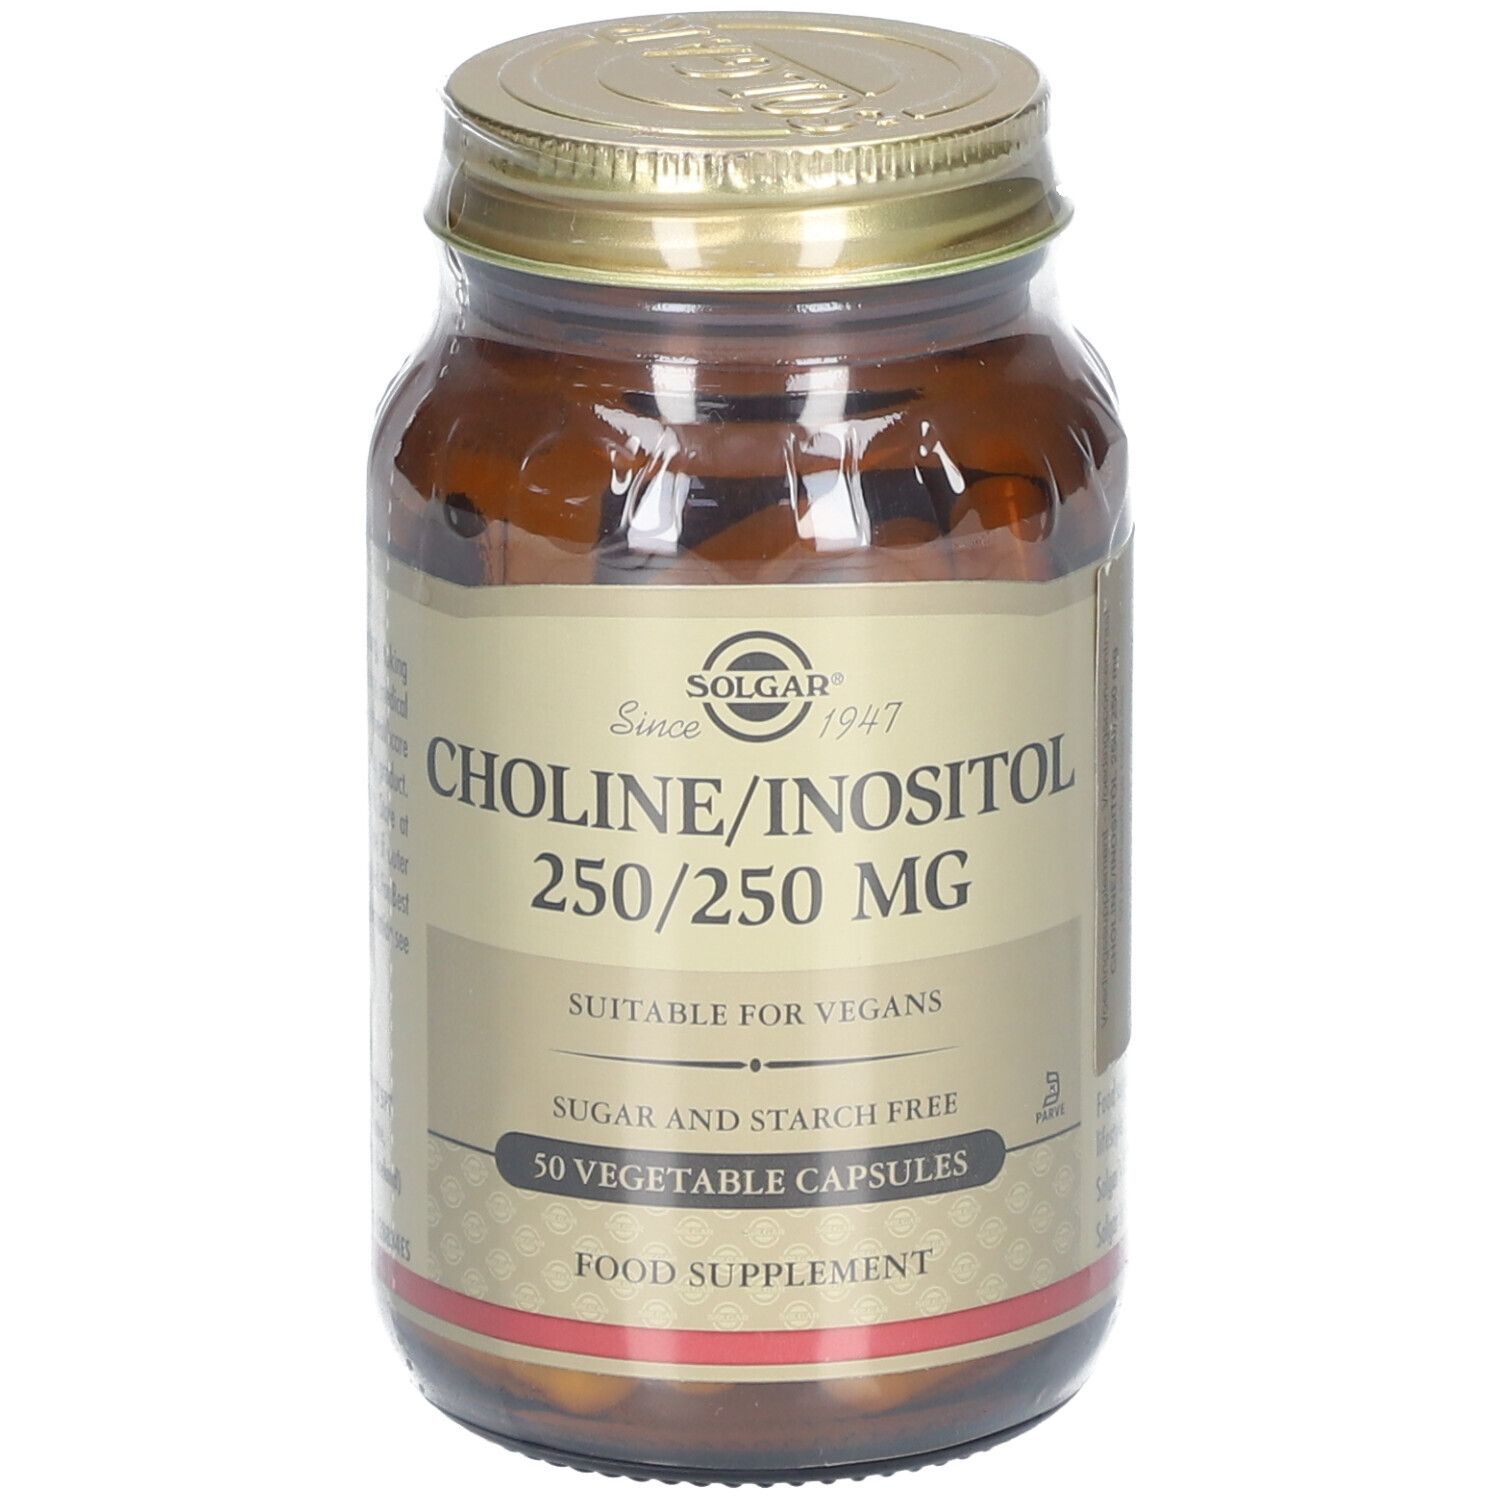 Solgar® Choline/Inosito 250/250 mg